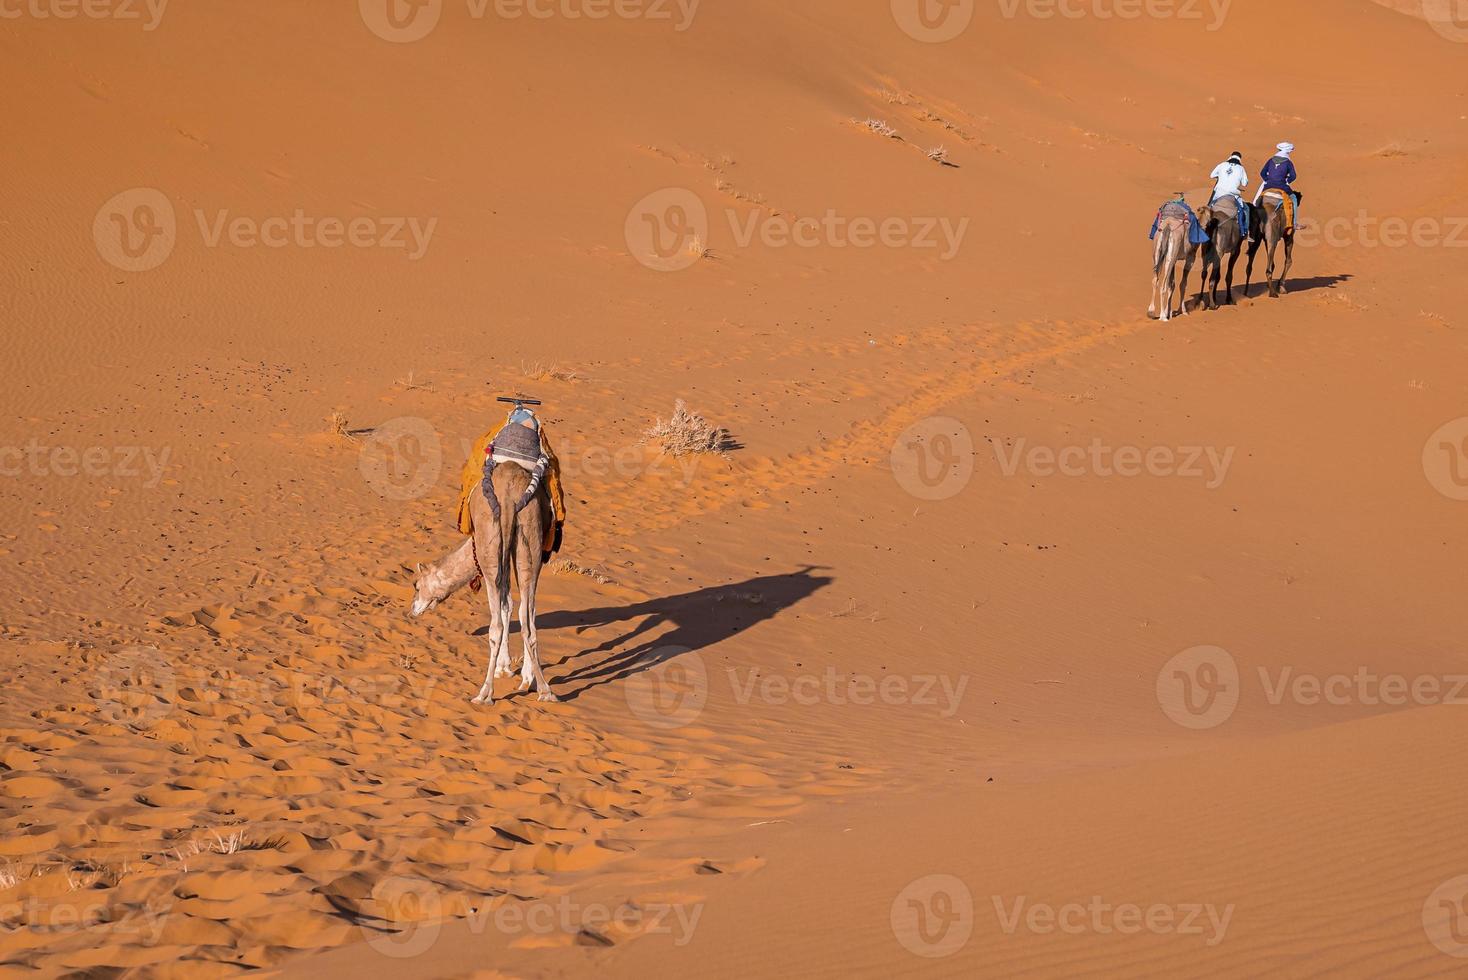 beduiner rider kameler genom sanden i öknen en solig sommardag foto